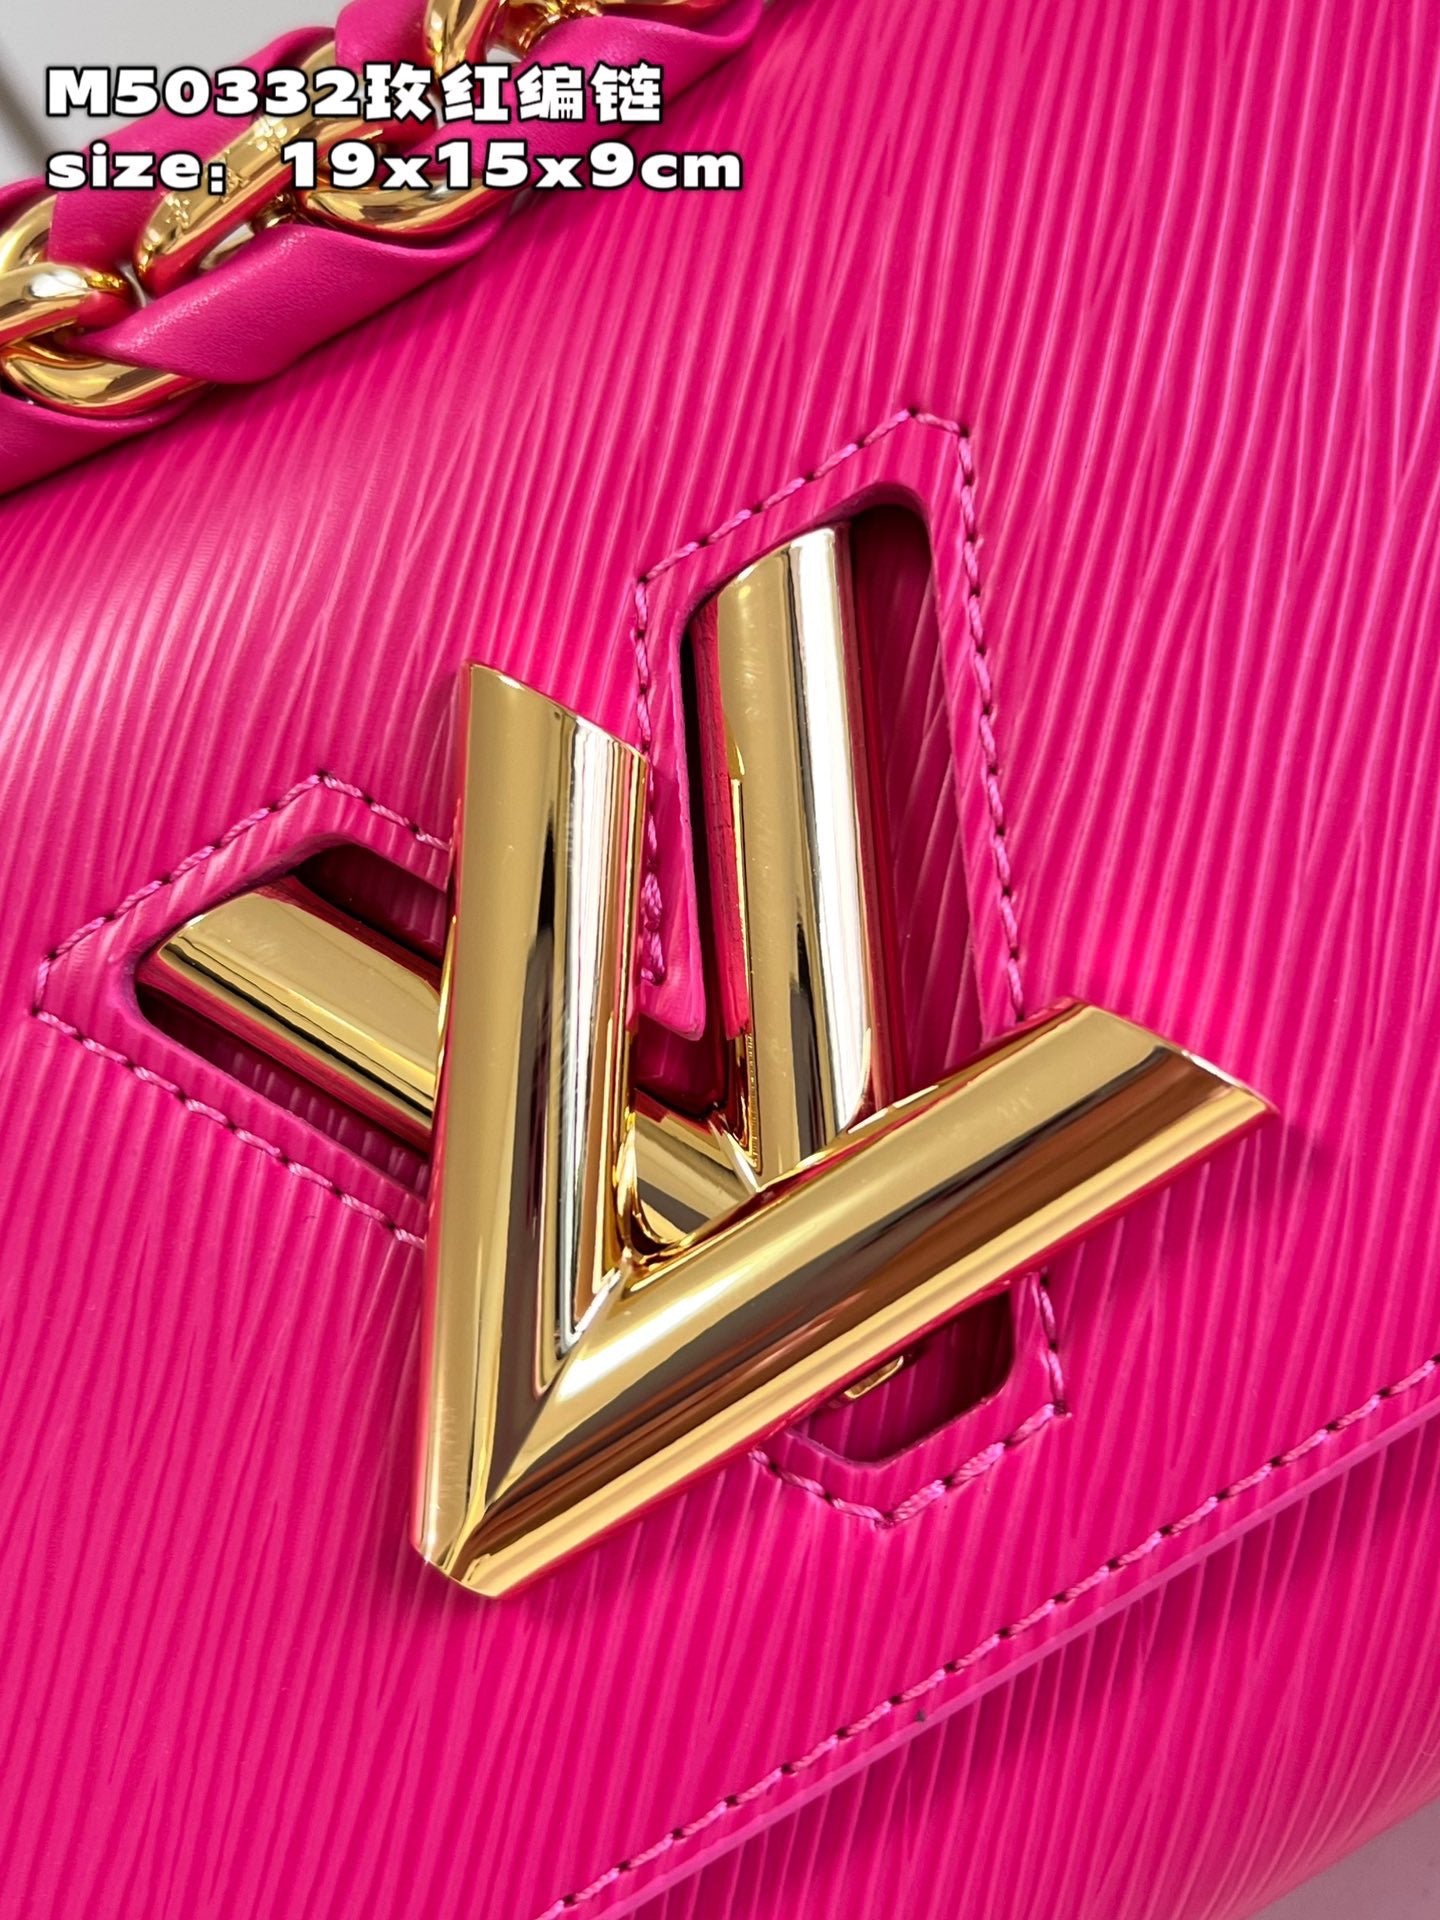 LOUIS VUITTON Epi Twist Braided Chain Shoulder Bag PM Rose Miami Pink  1265598